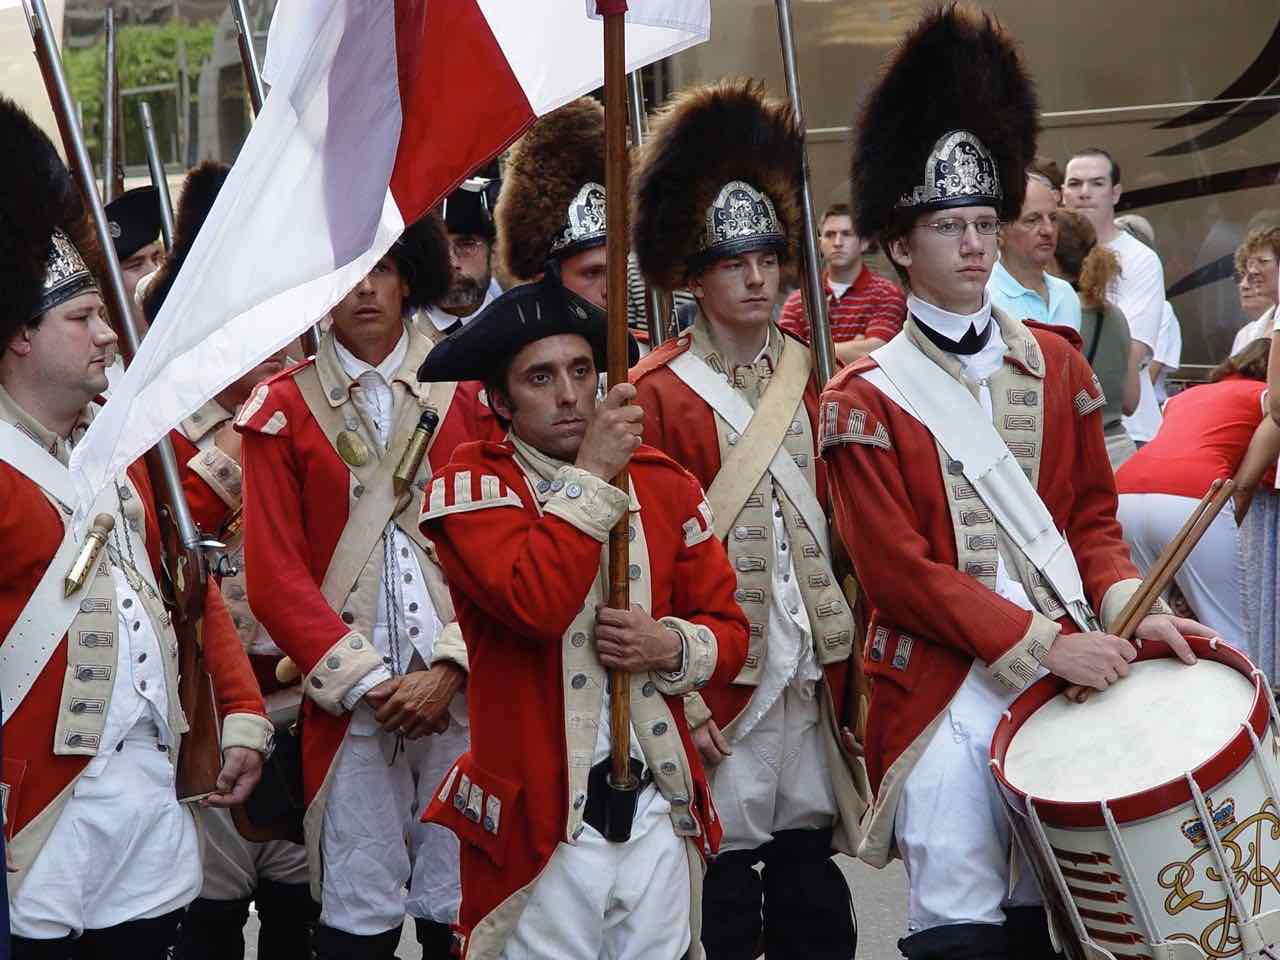 Boston patriots parade on July 4